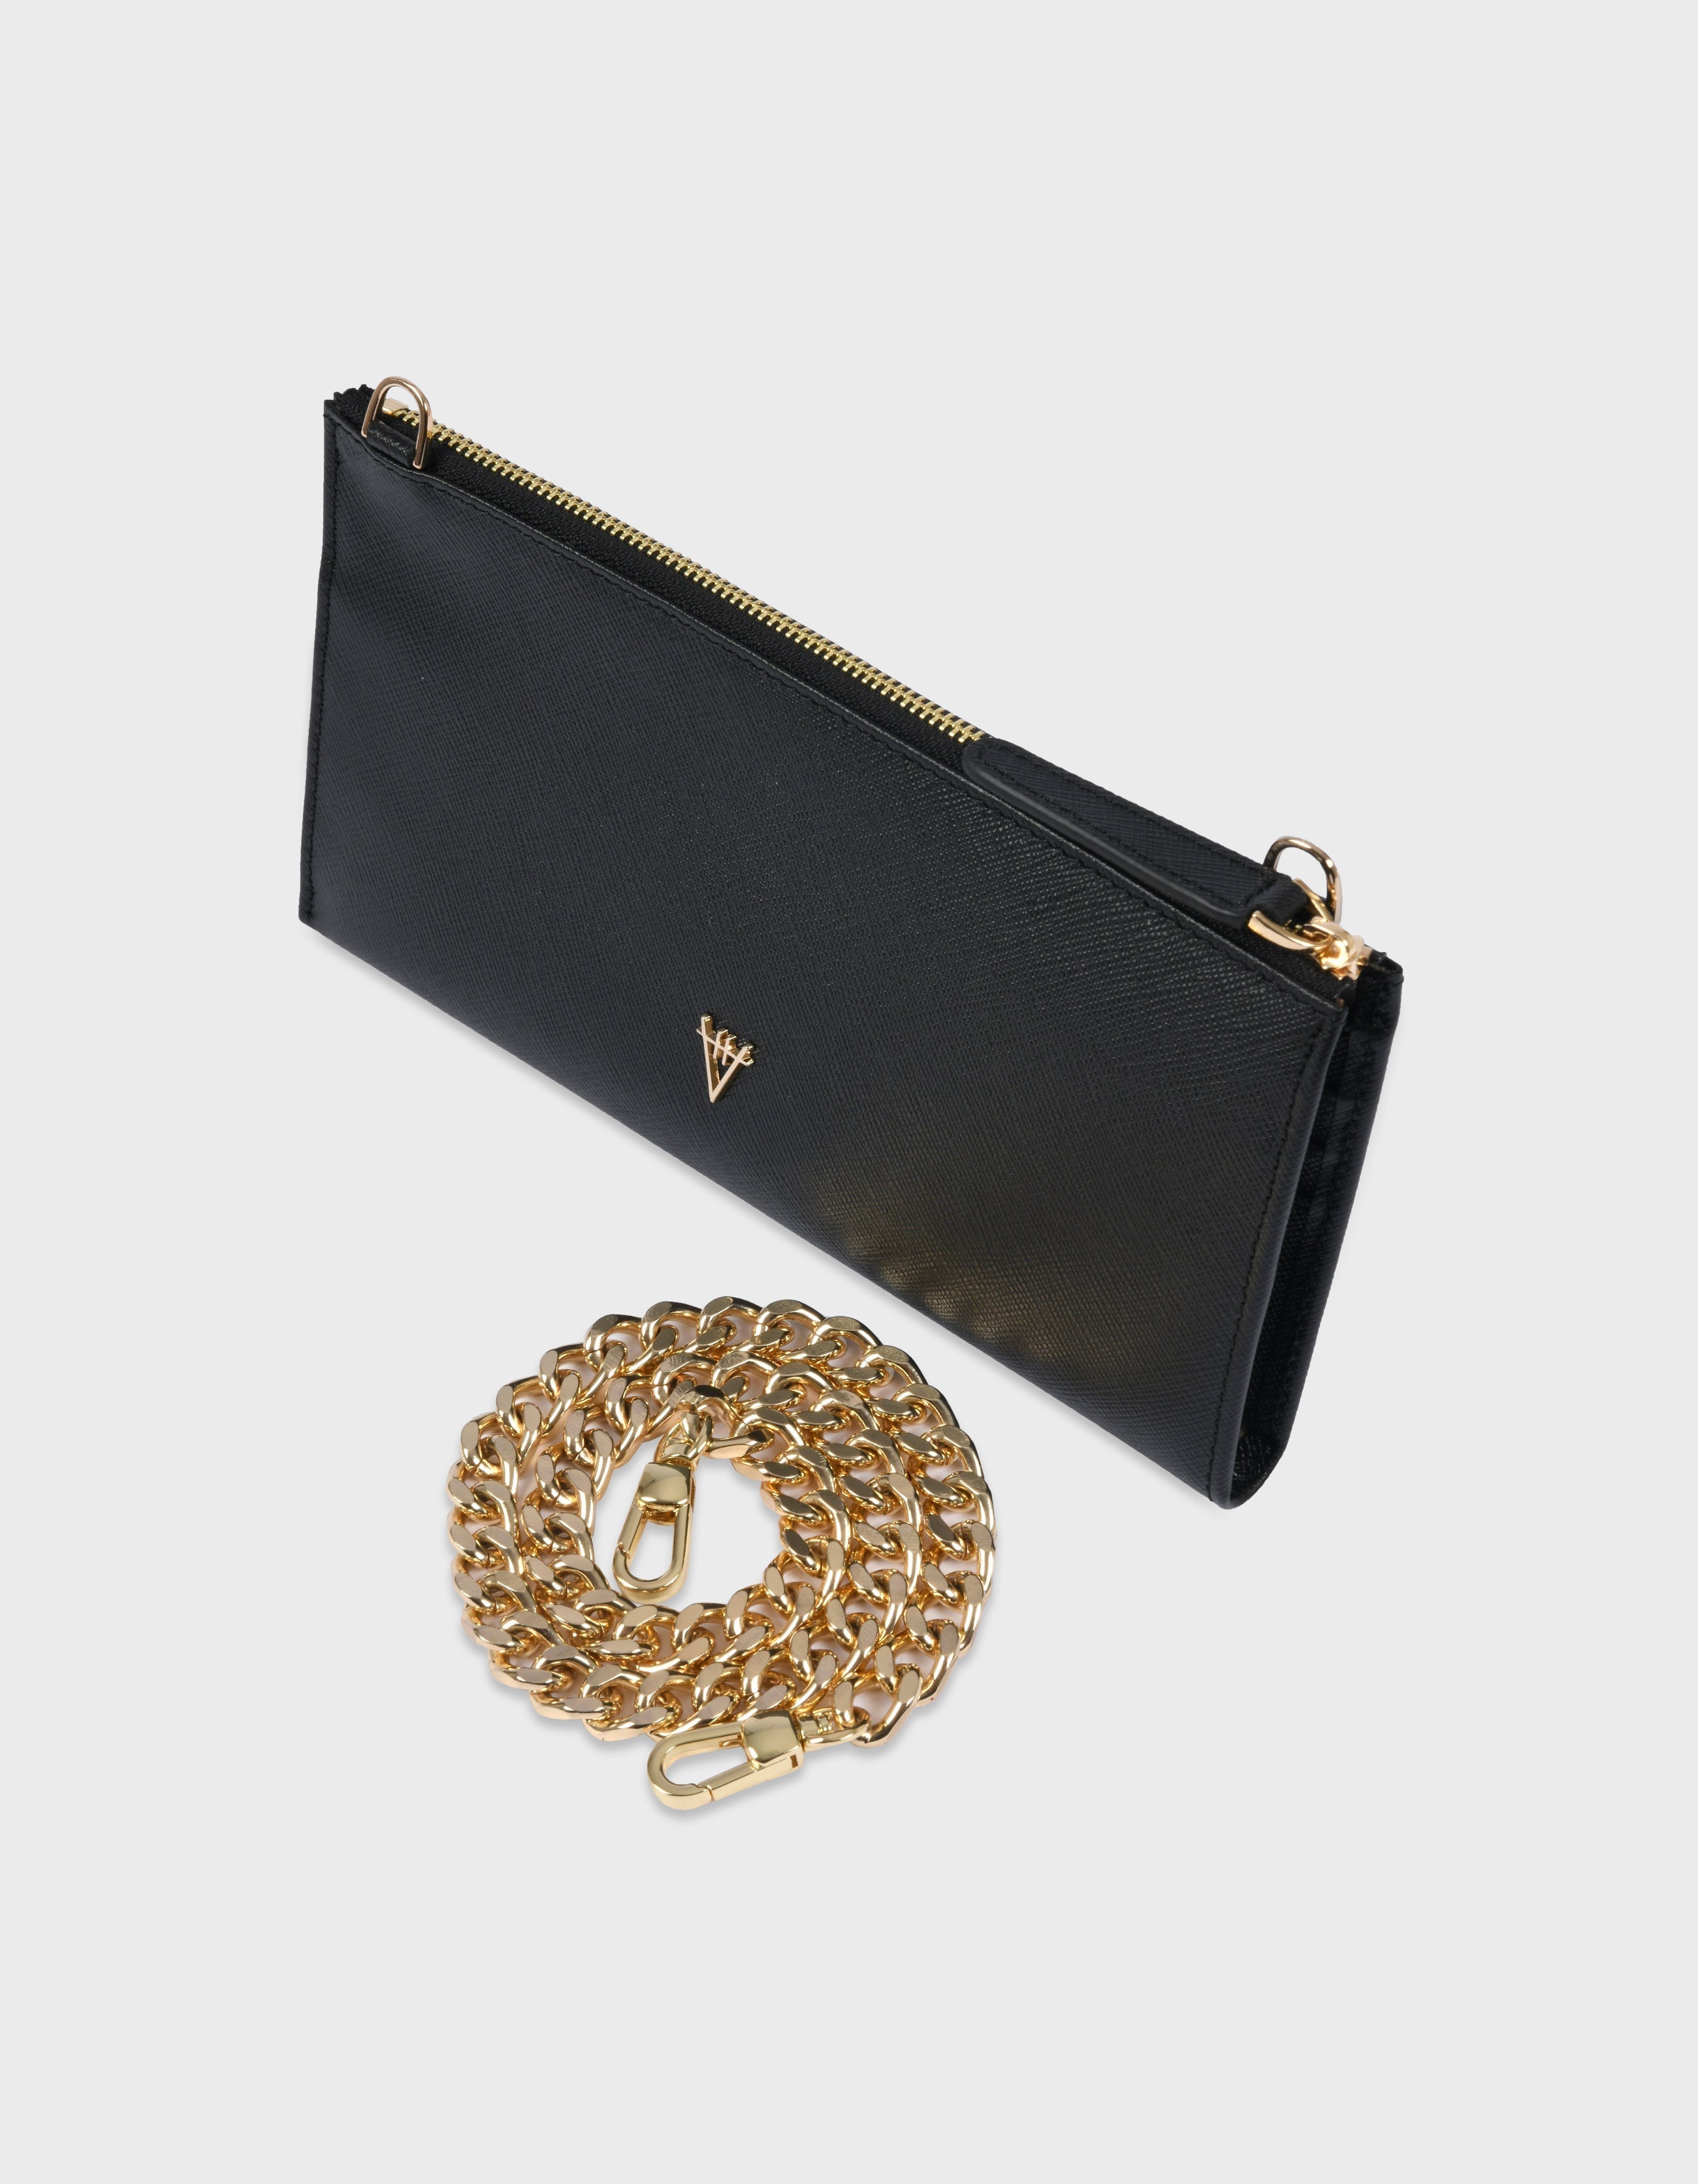 HiVa Atelier | Omnia Chain Bag & Clutch Black | Beautiful and Versatile